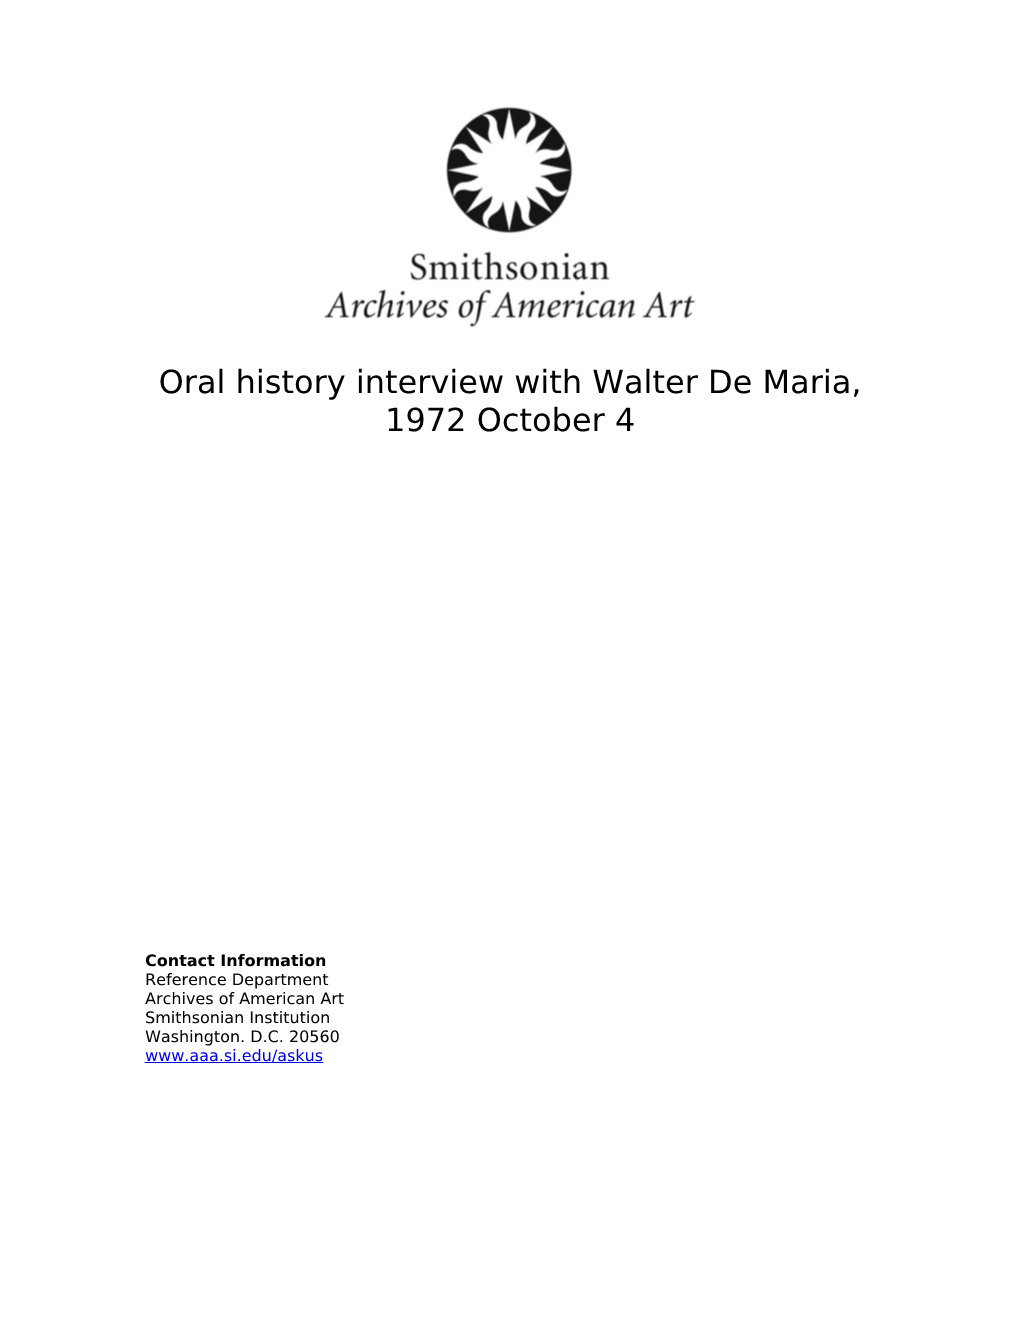 Oral History Interview with Walter De Maria, 1972 October 4